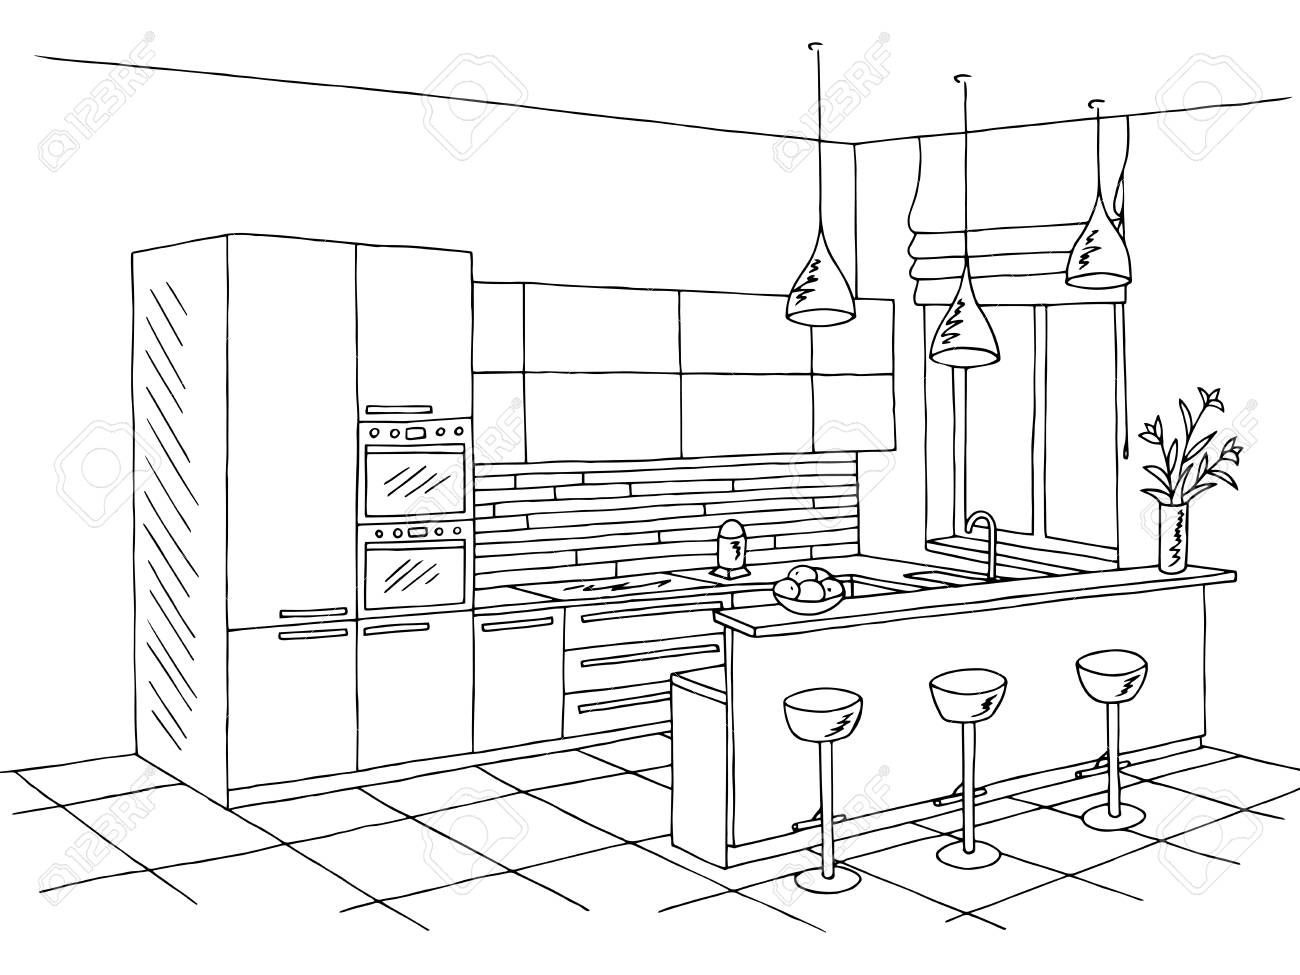 Kitchen room interior black white graphic art sketch illustration.